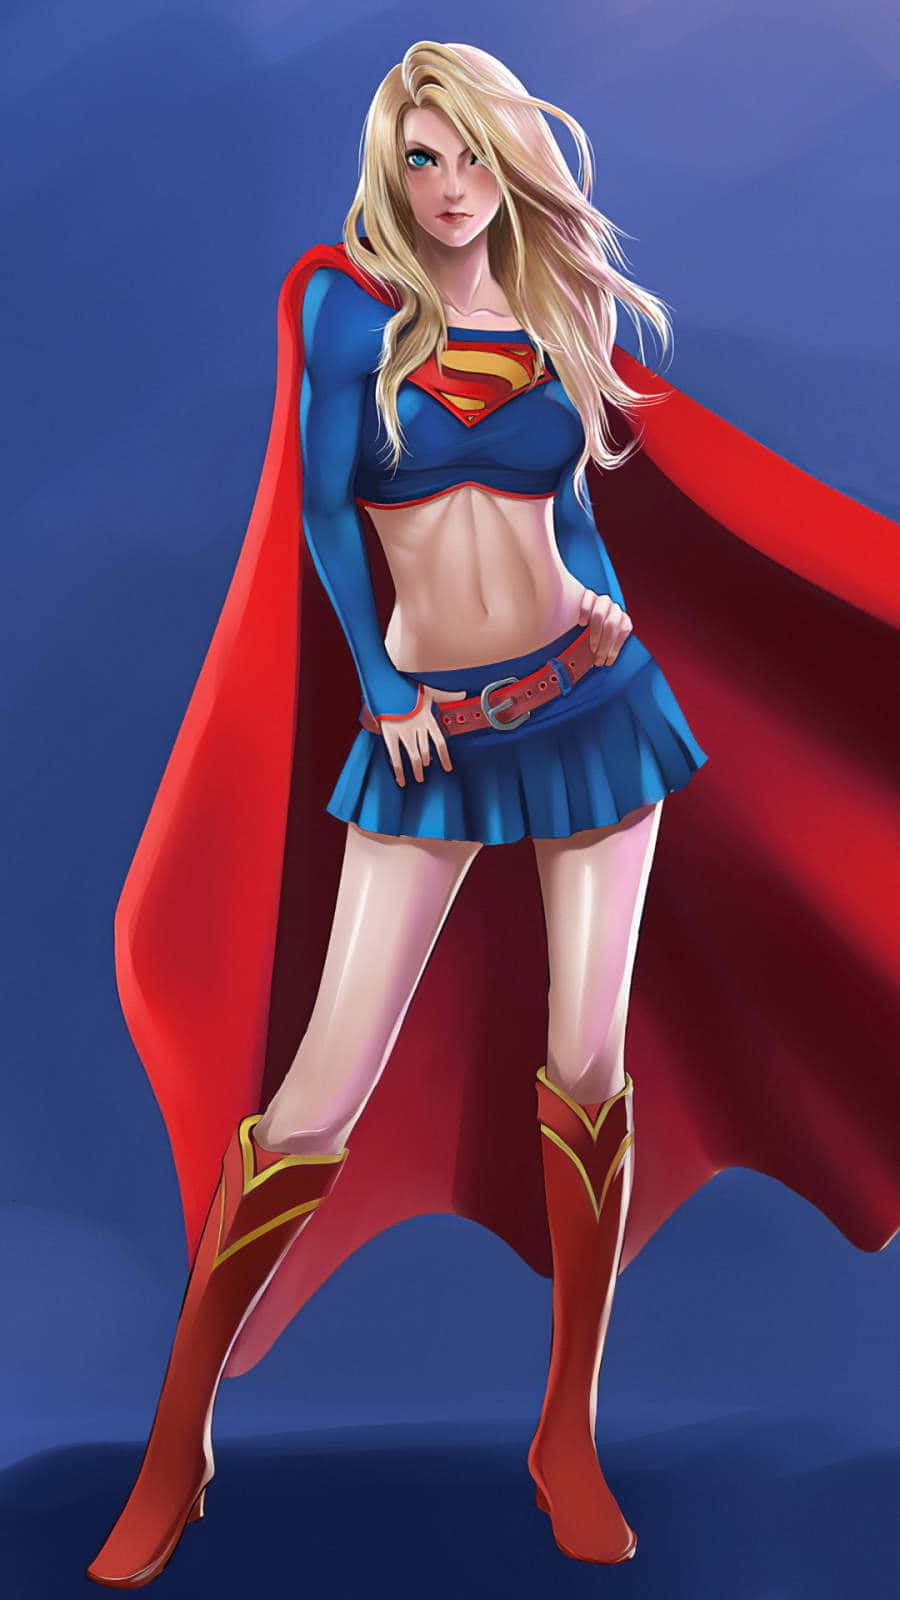 Naughty Girl Wearing Superman Attire Background